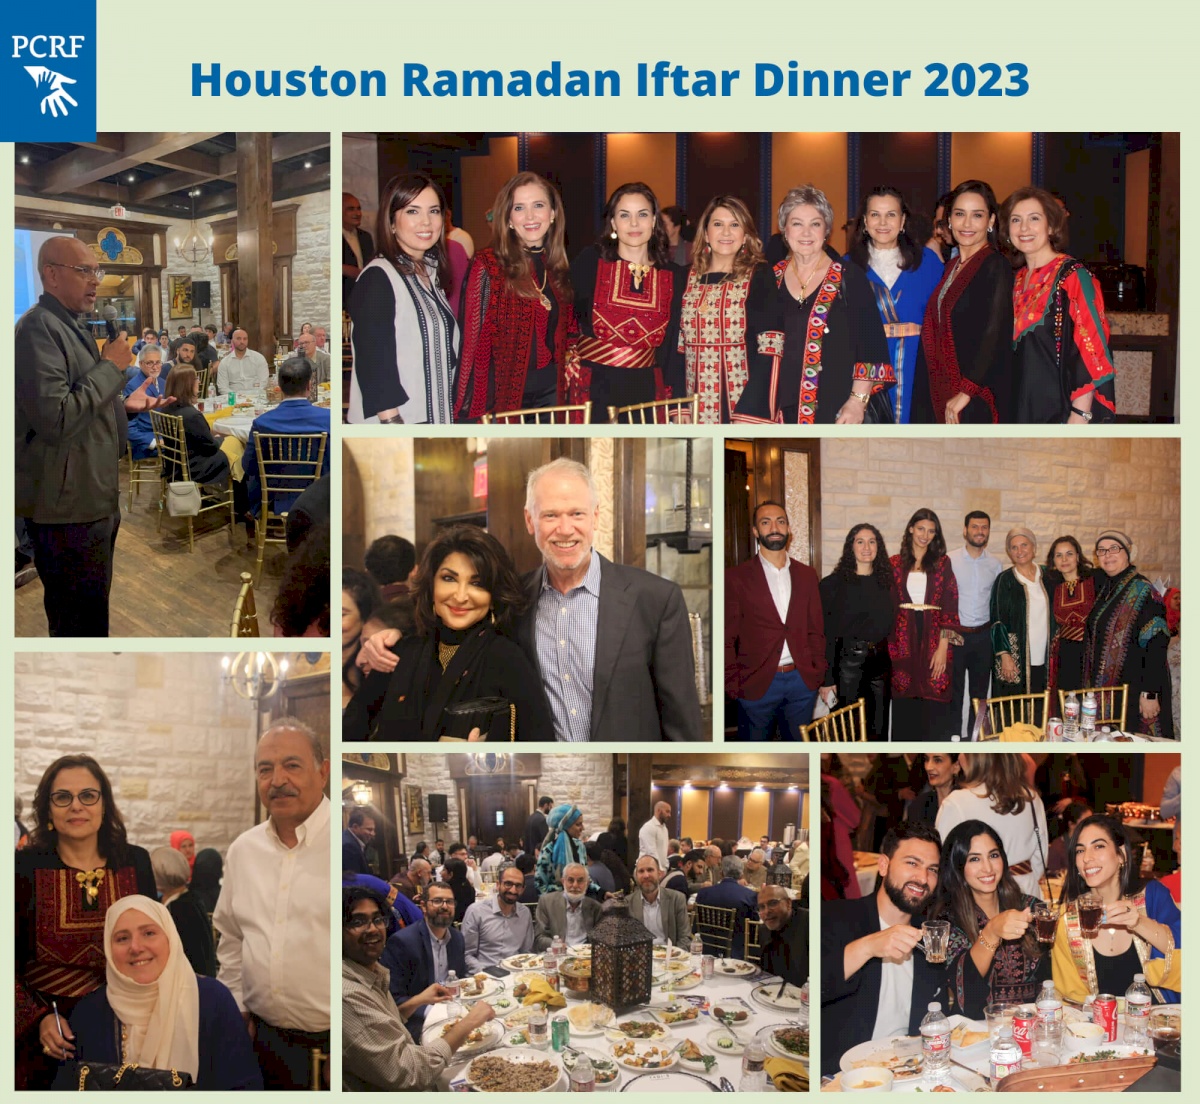 PCRF Houston Ramadan Iftar Dinner 2023